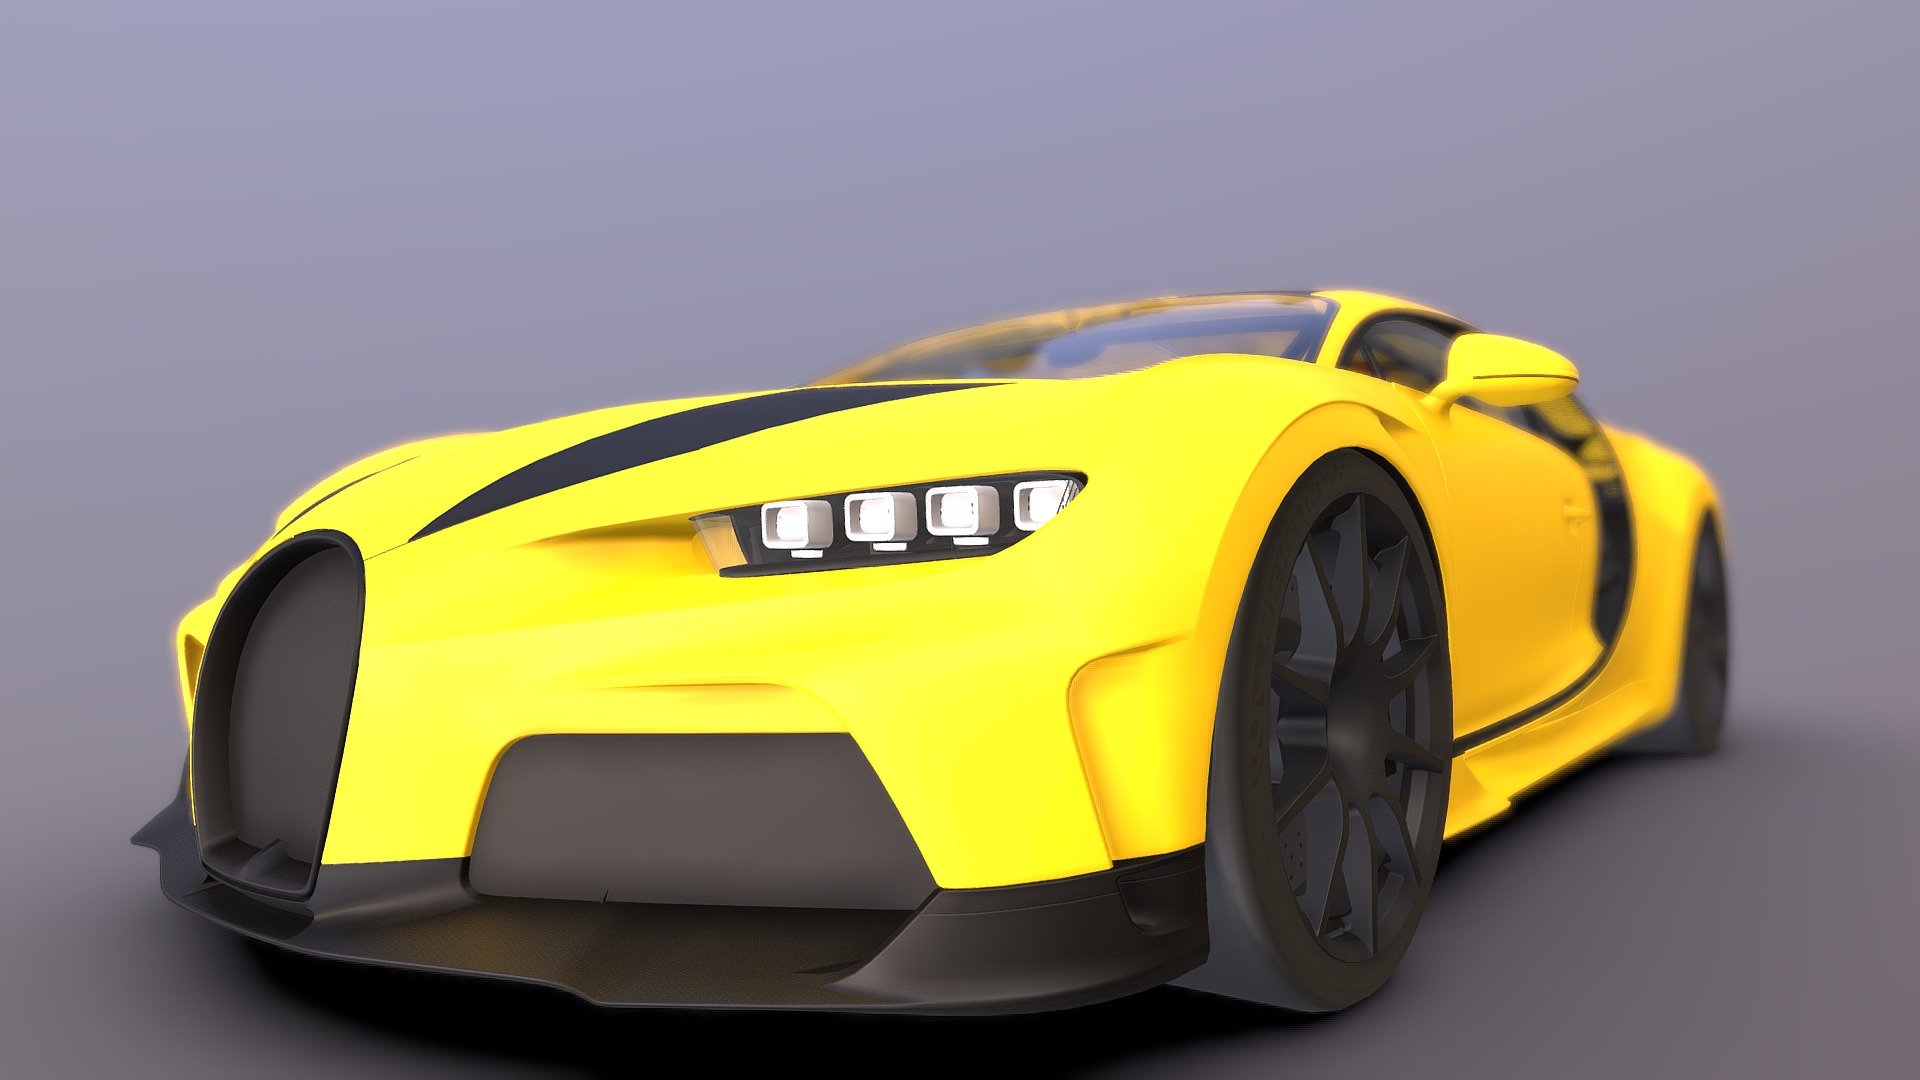 made : blender &amp; roblox studio
models : Beamng.DRIVE - bugatti chiron super sport yellow & black - Download Free 3D model by kevin (ケビン) (@sohyalebret) 3d model